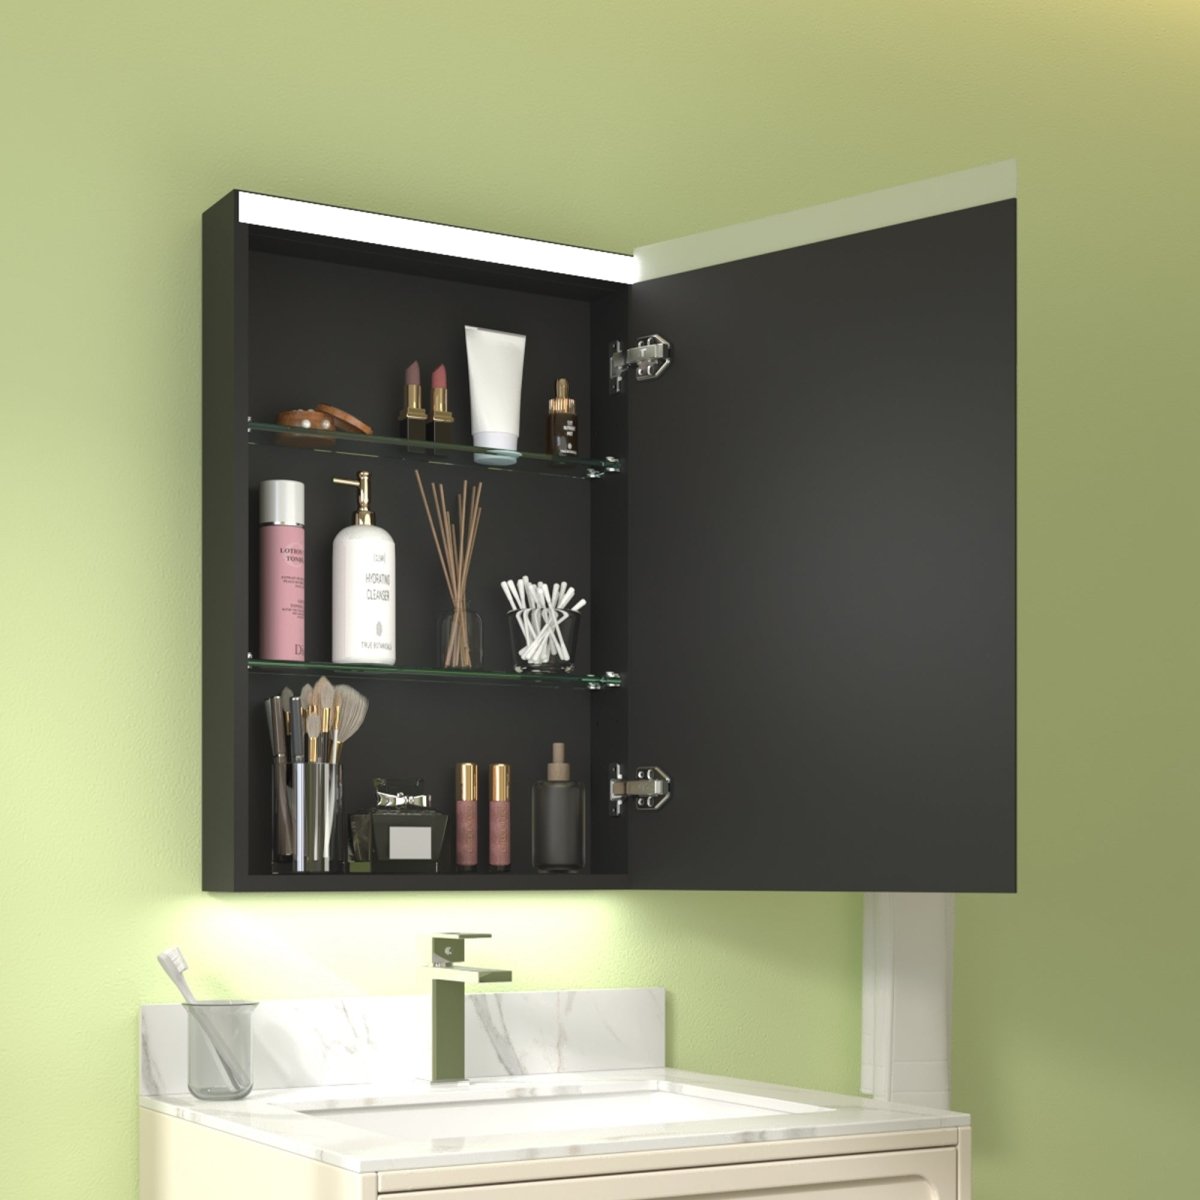 ExBrite 20" W x 30" H LED Bathroom Led Light Medicine Cabinet with Mirrors